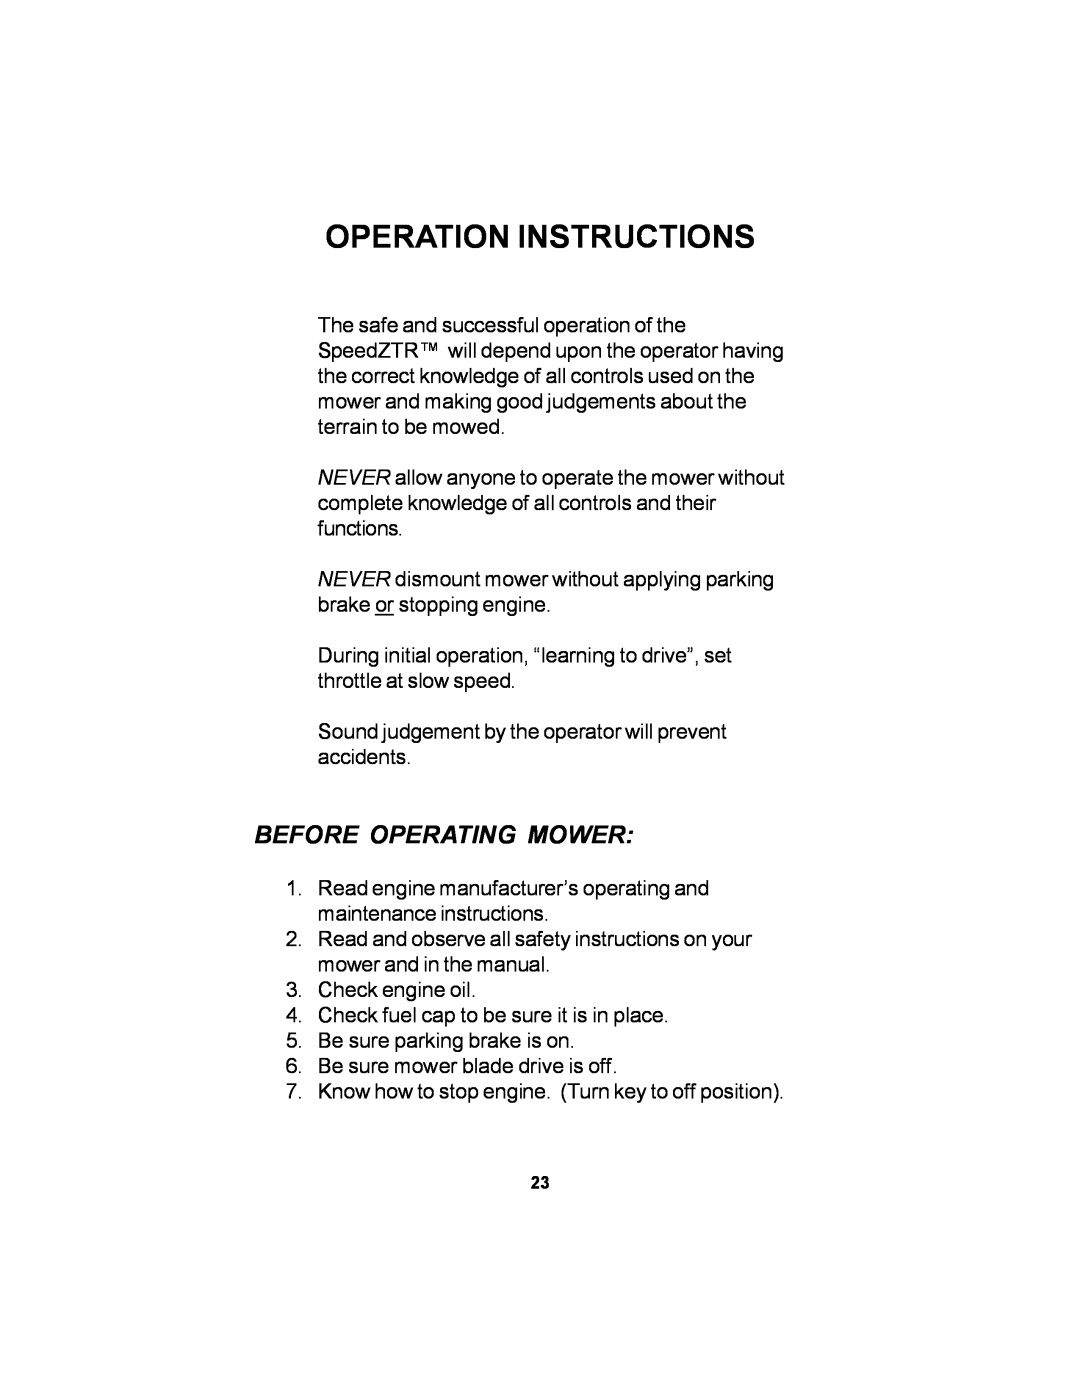 Dixon 36 manual Operation Instructions, Before Operating Mower 